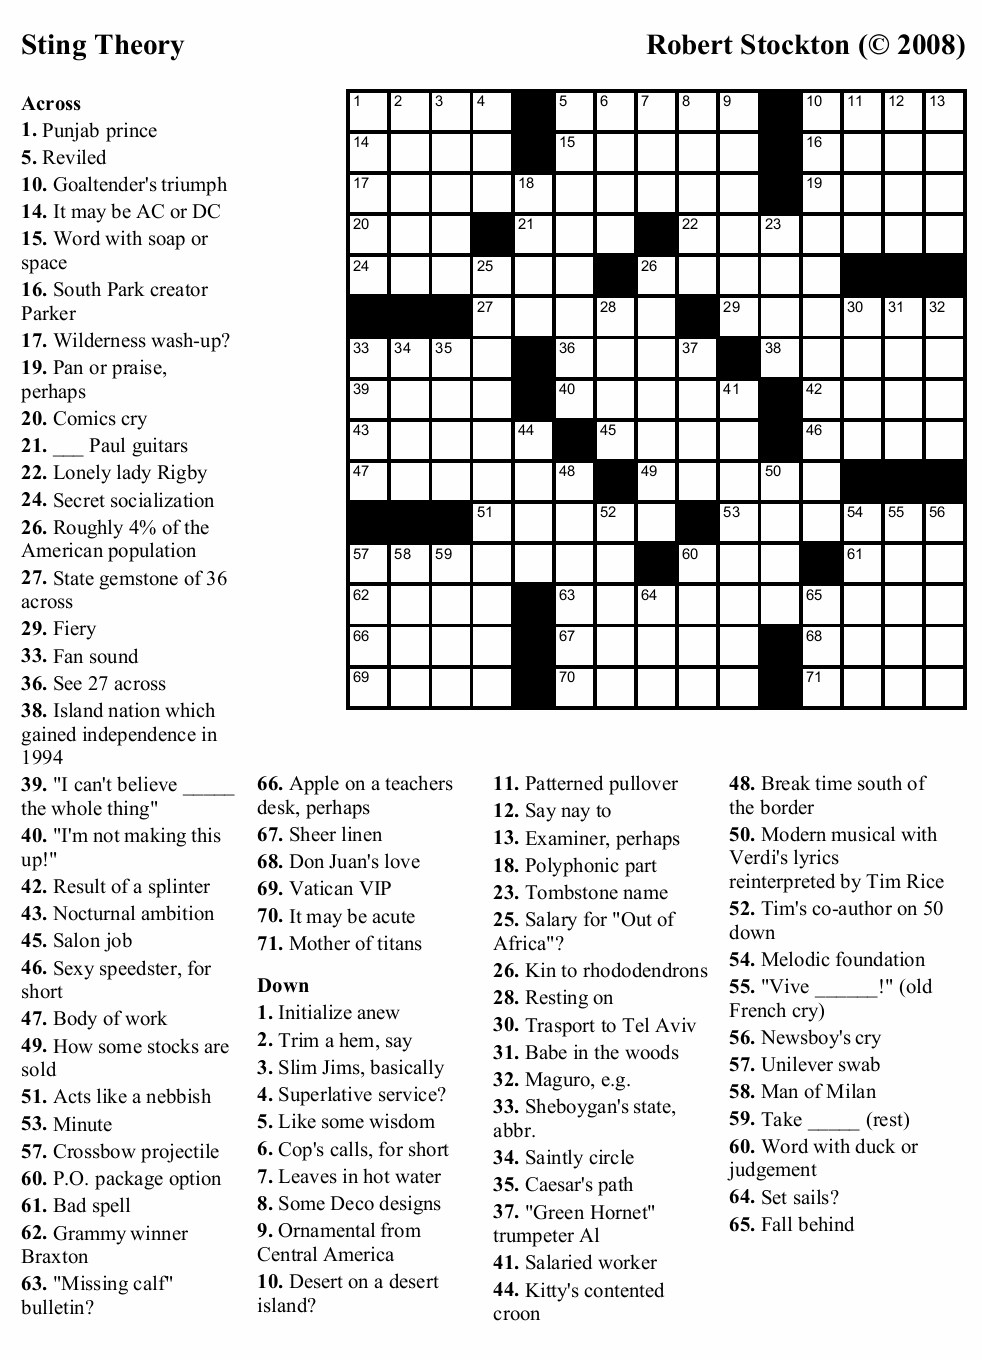 Printable Crossword Washington Post